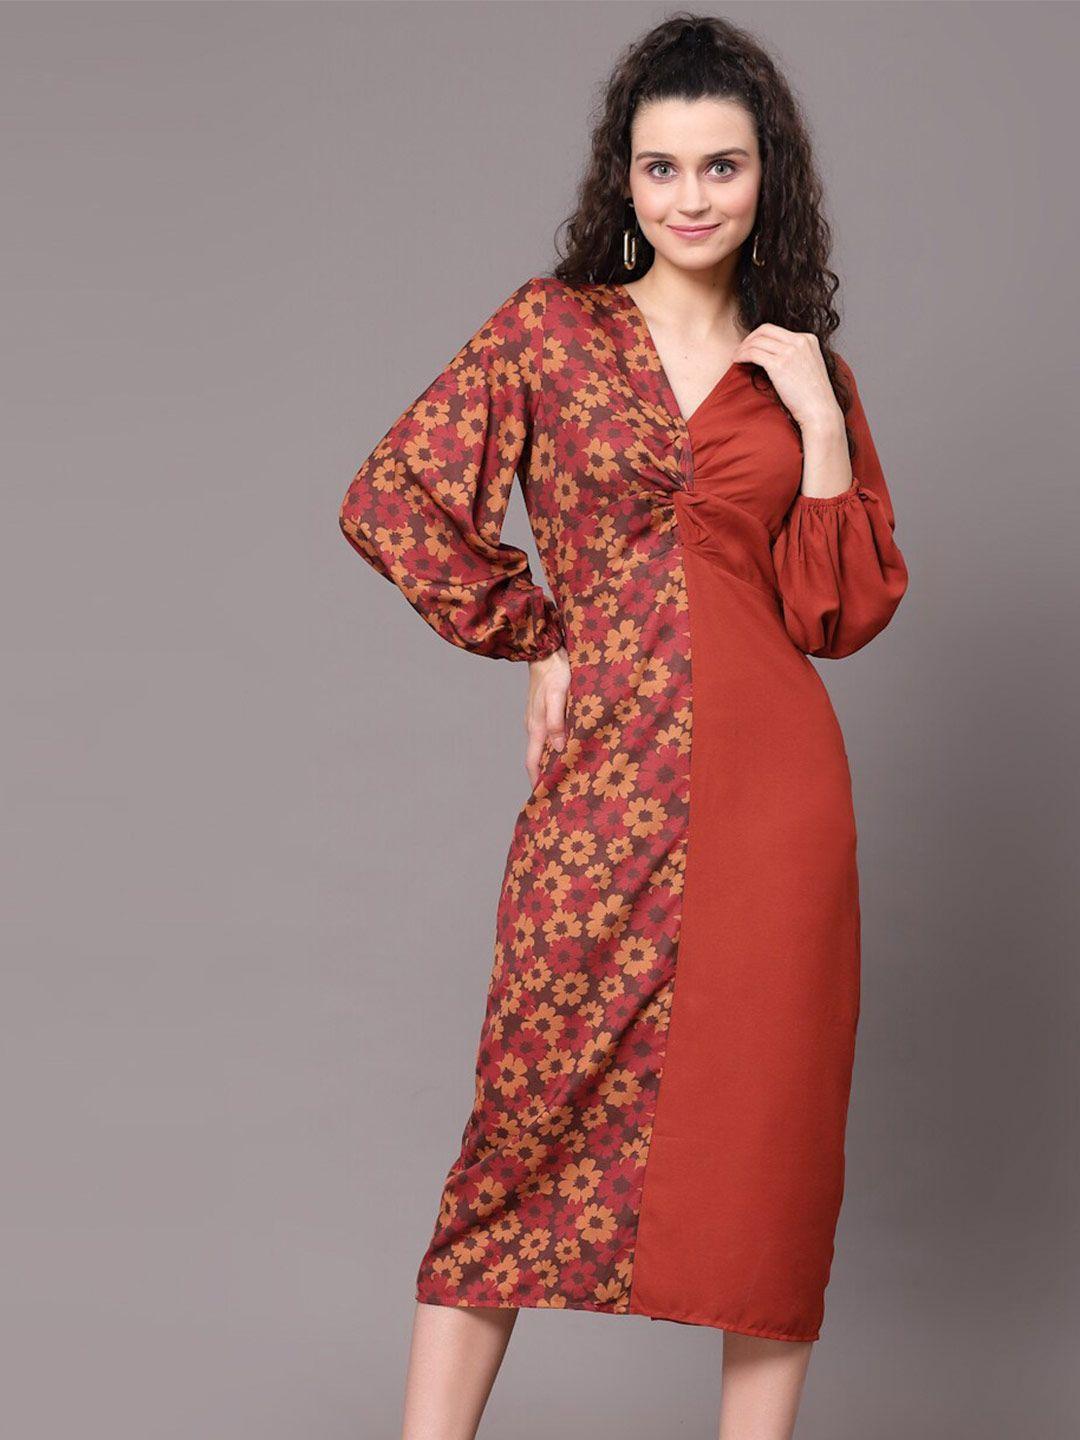 kassually puff sleeves floral sheath dress